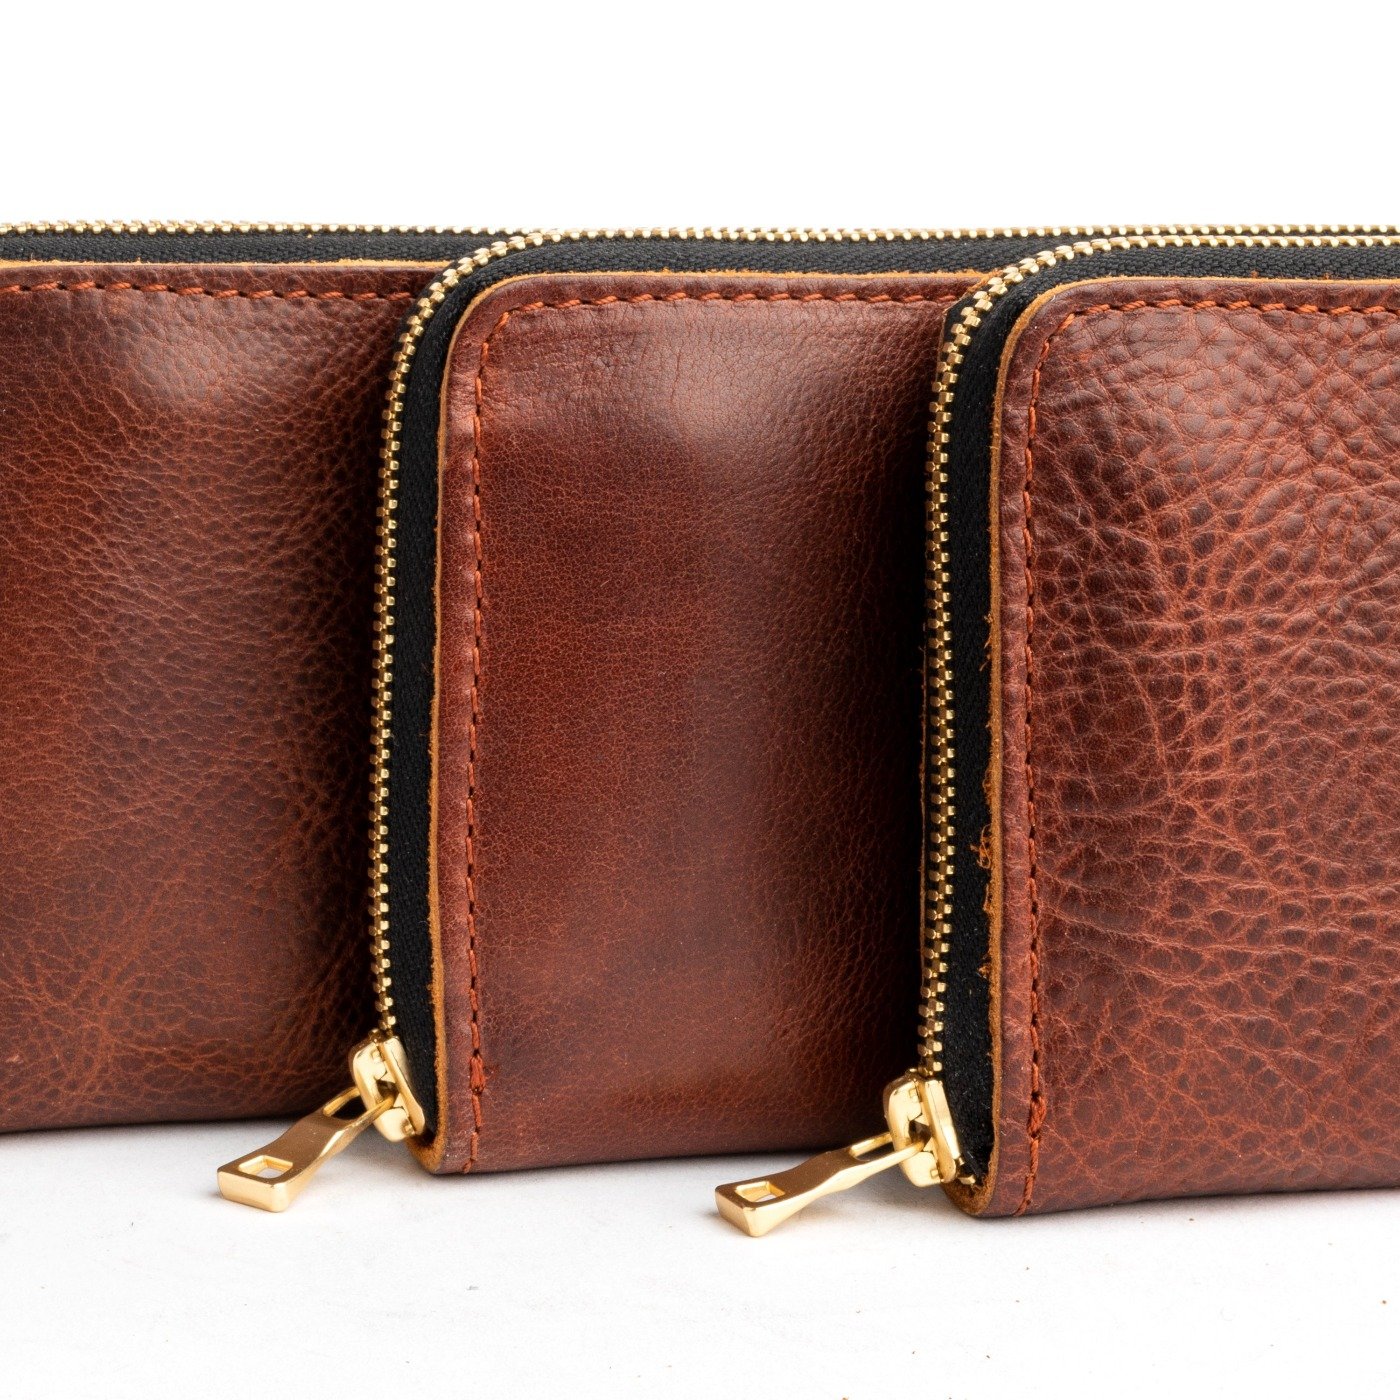 All Color: Nutmeg | leather handmade wallet